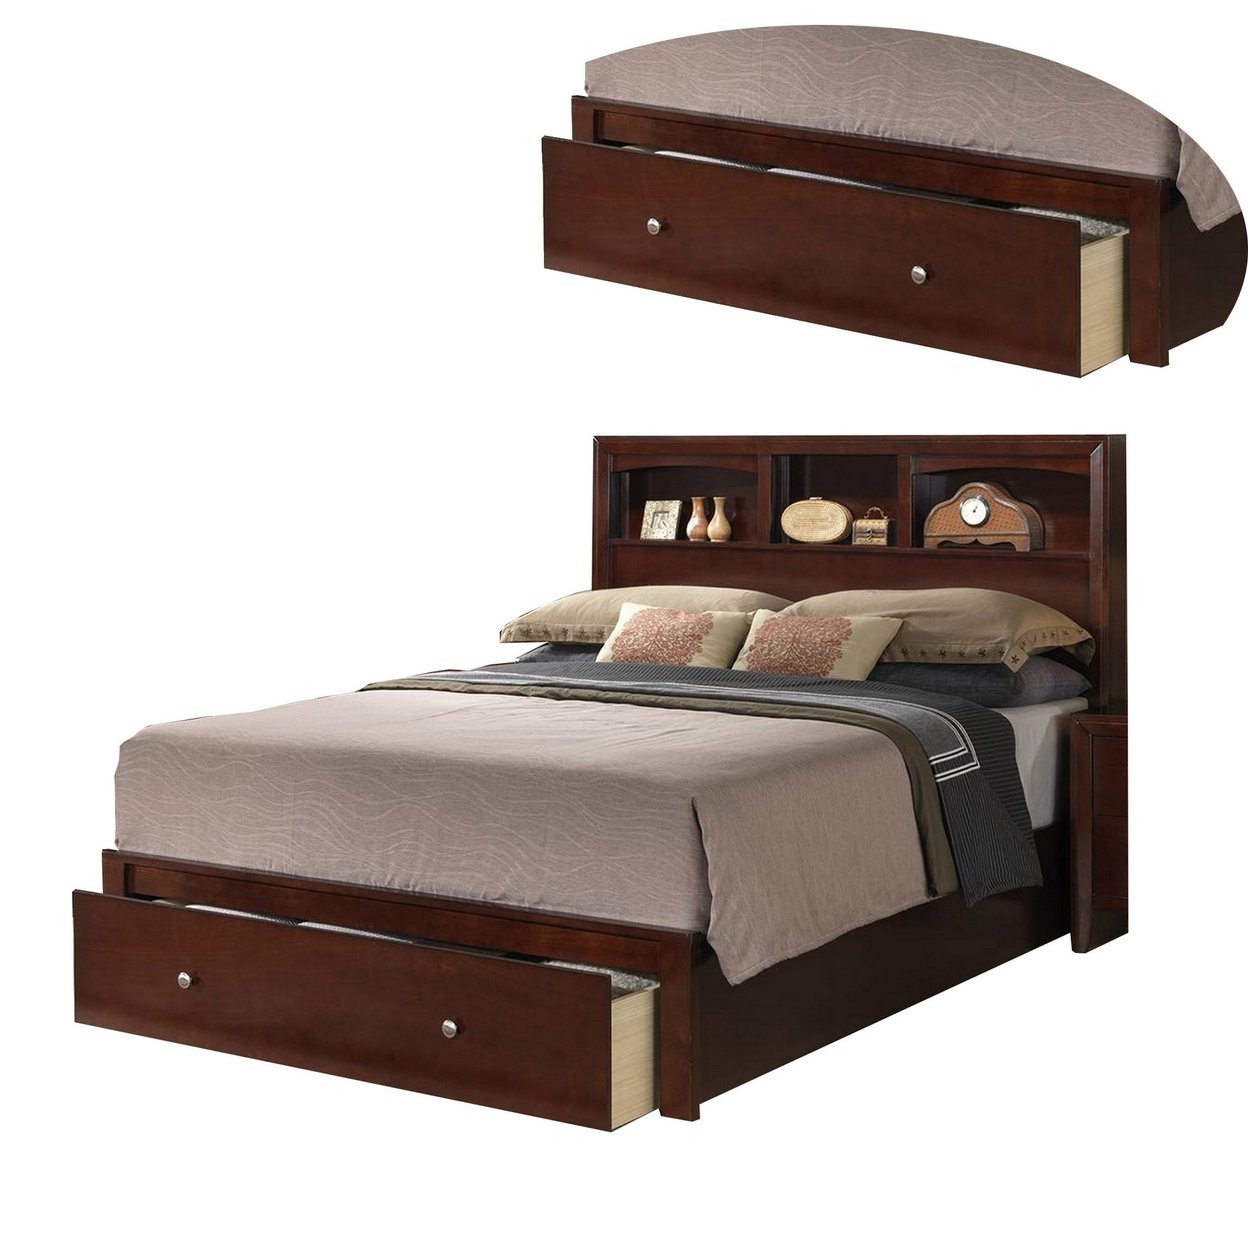 Queen Bed With Storage Footboard, Bookcase Headboard, Modern Cherry Brown- Saltoro Sherpi